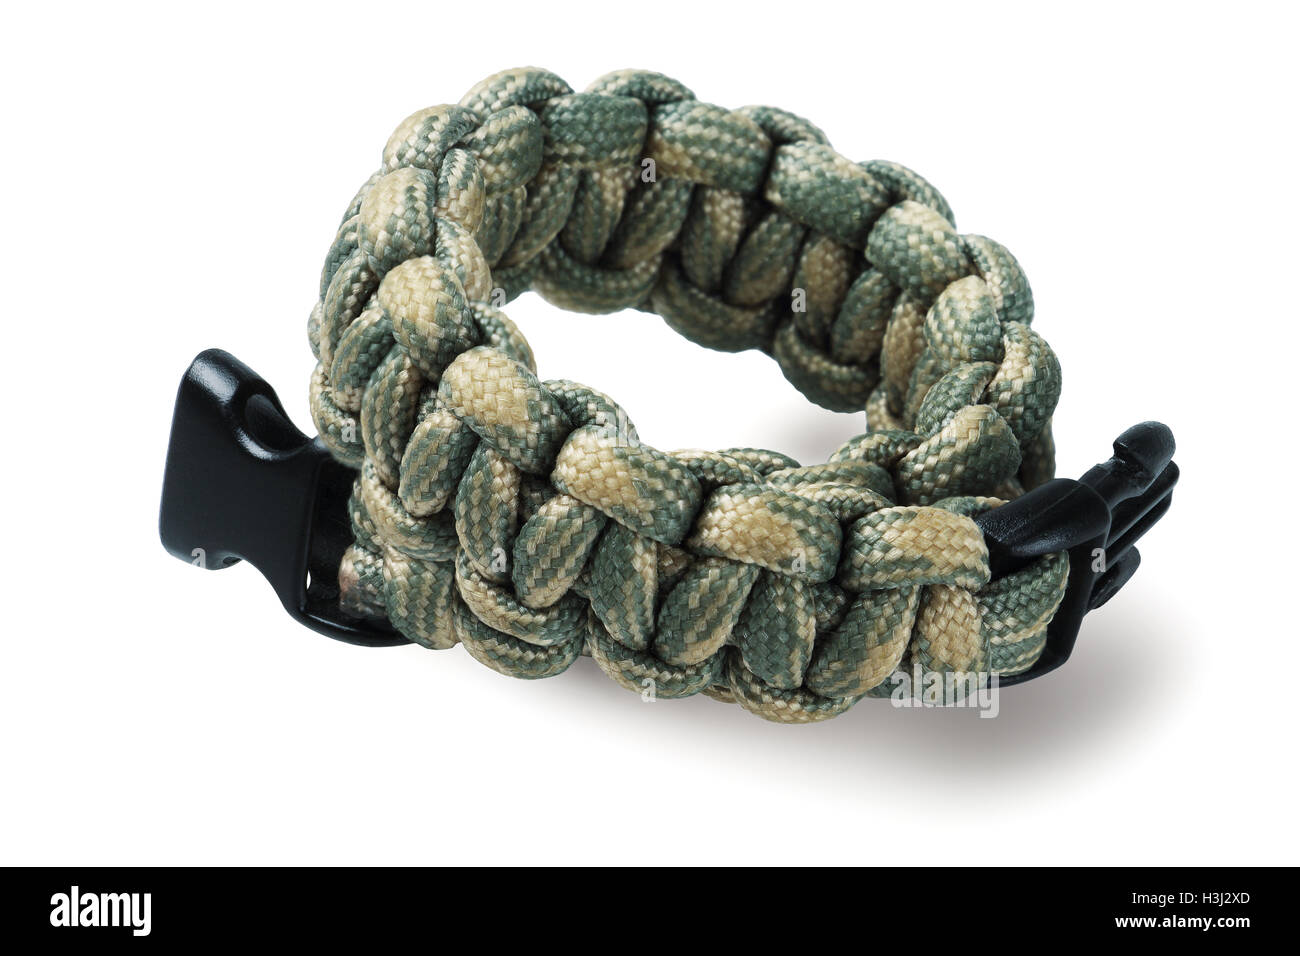 https://c8.alamy.com/comp/H3J2XD/para-cord-survival-bracelet-on-white-background-H3J2XD.jpg